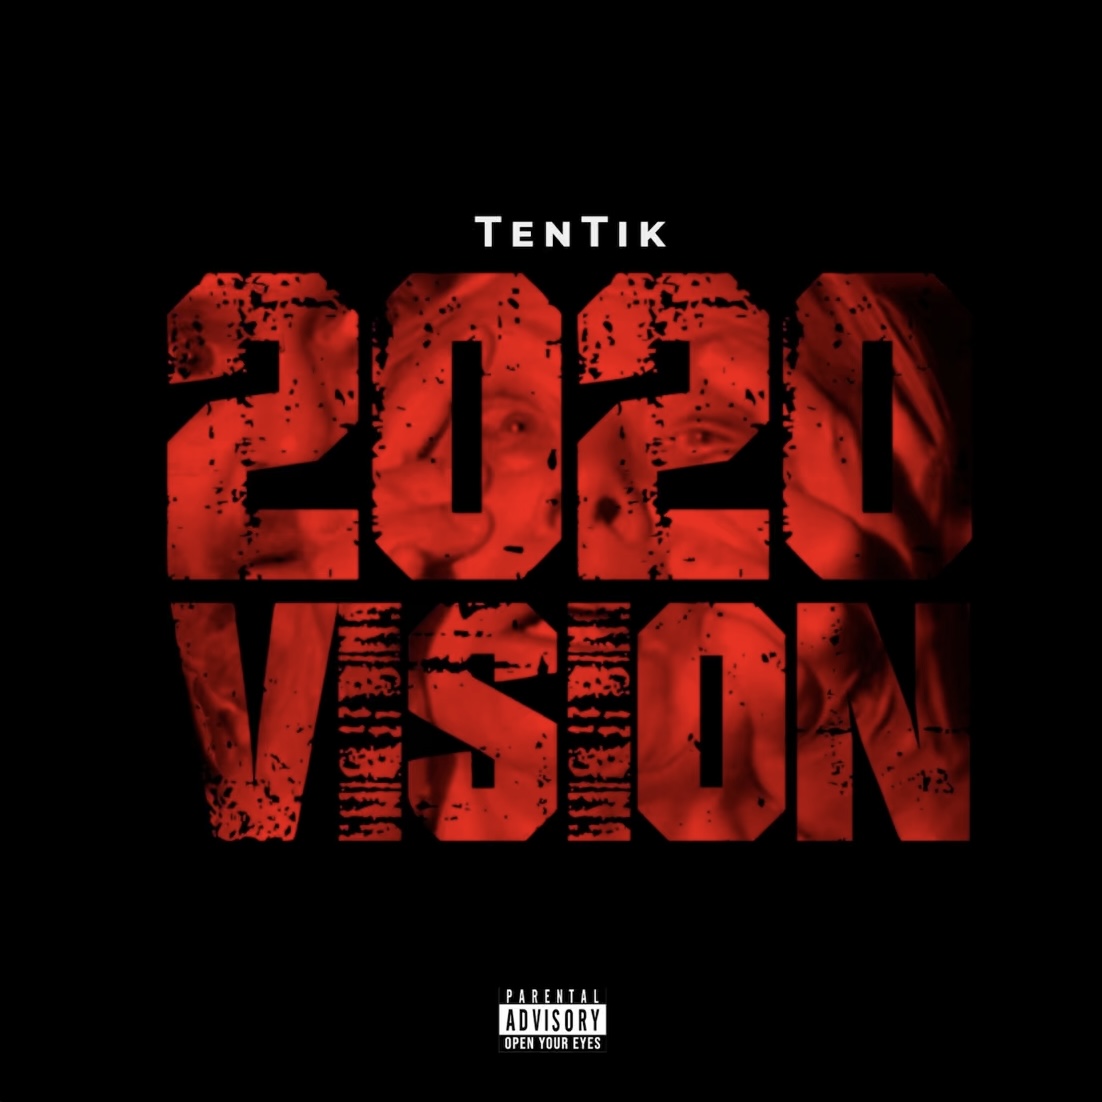 2020 vision single artwork